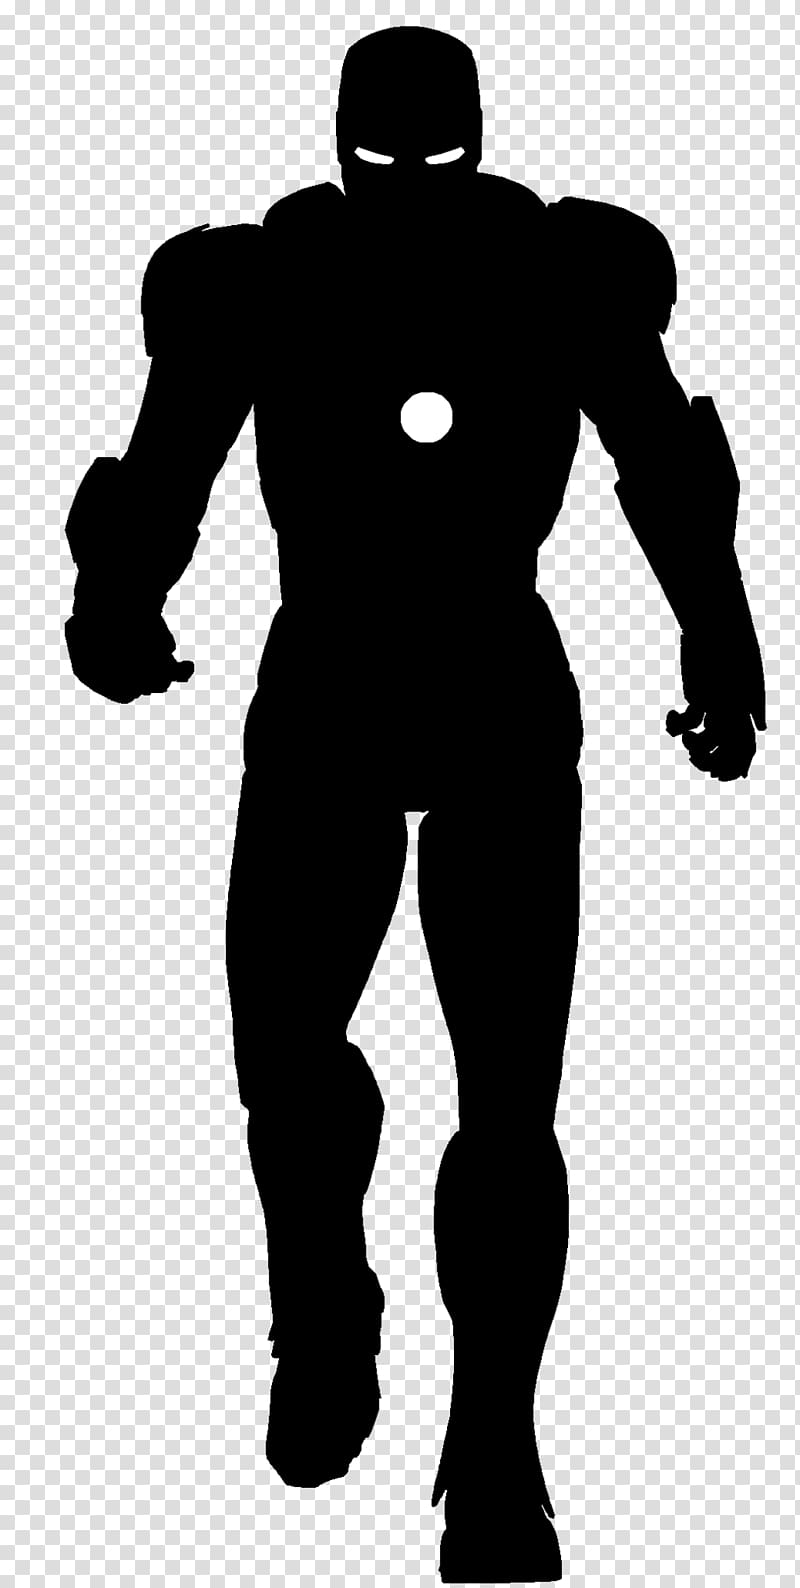 Marvel Iron Man , Iron Man Silhouette Superhero, man silhouette transparent background PNG clipart